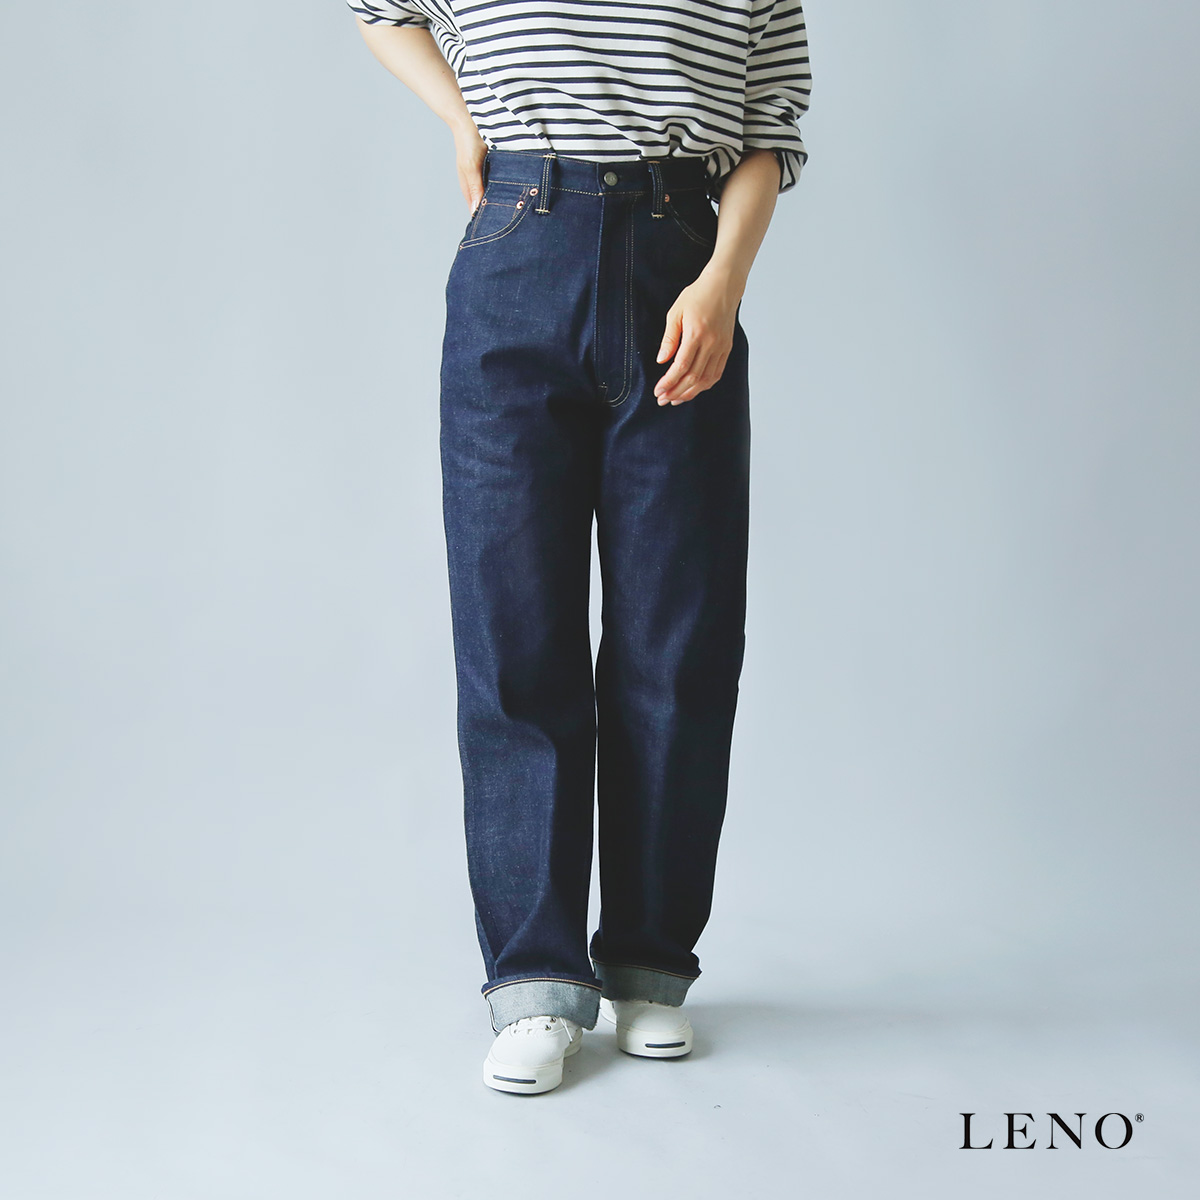 LENO(リノ)ハイウエストジーンズ”KAY” leno-j005 【サイズ交換初回無料】